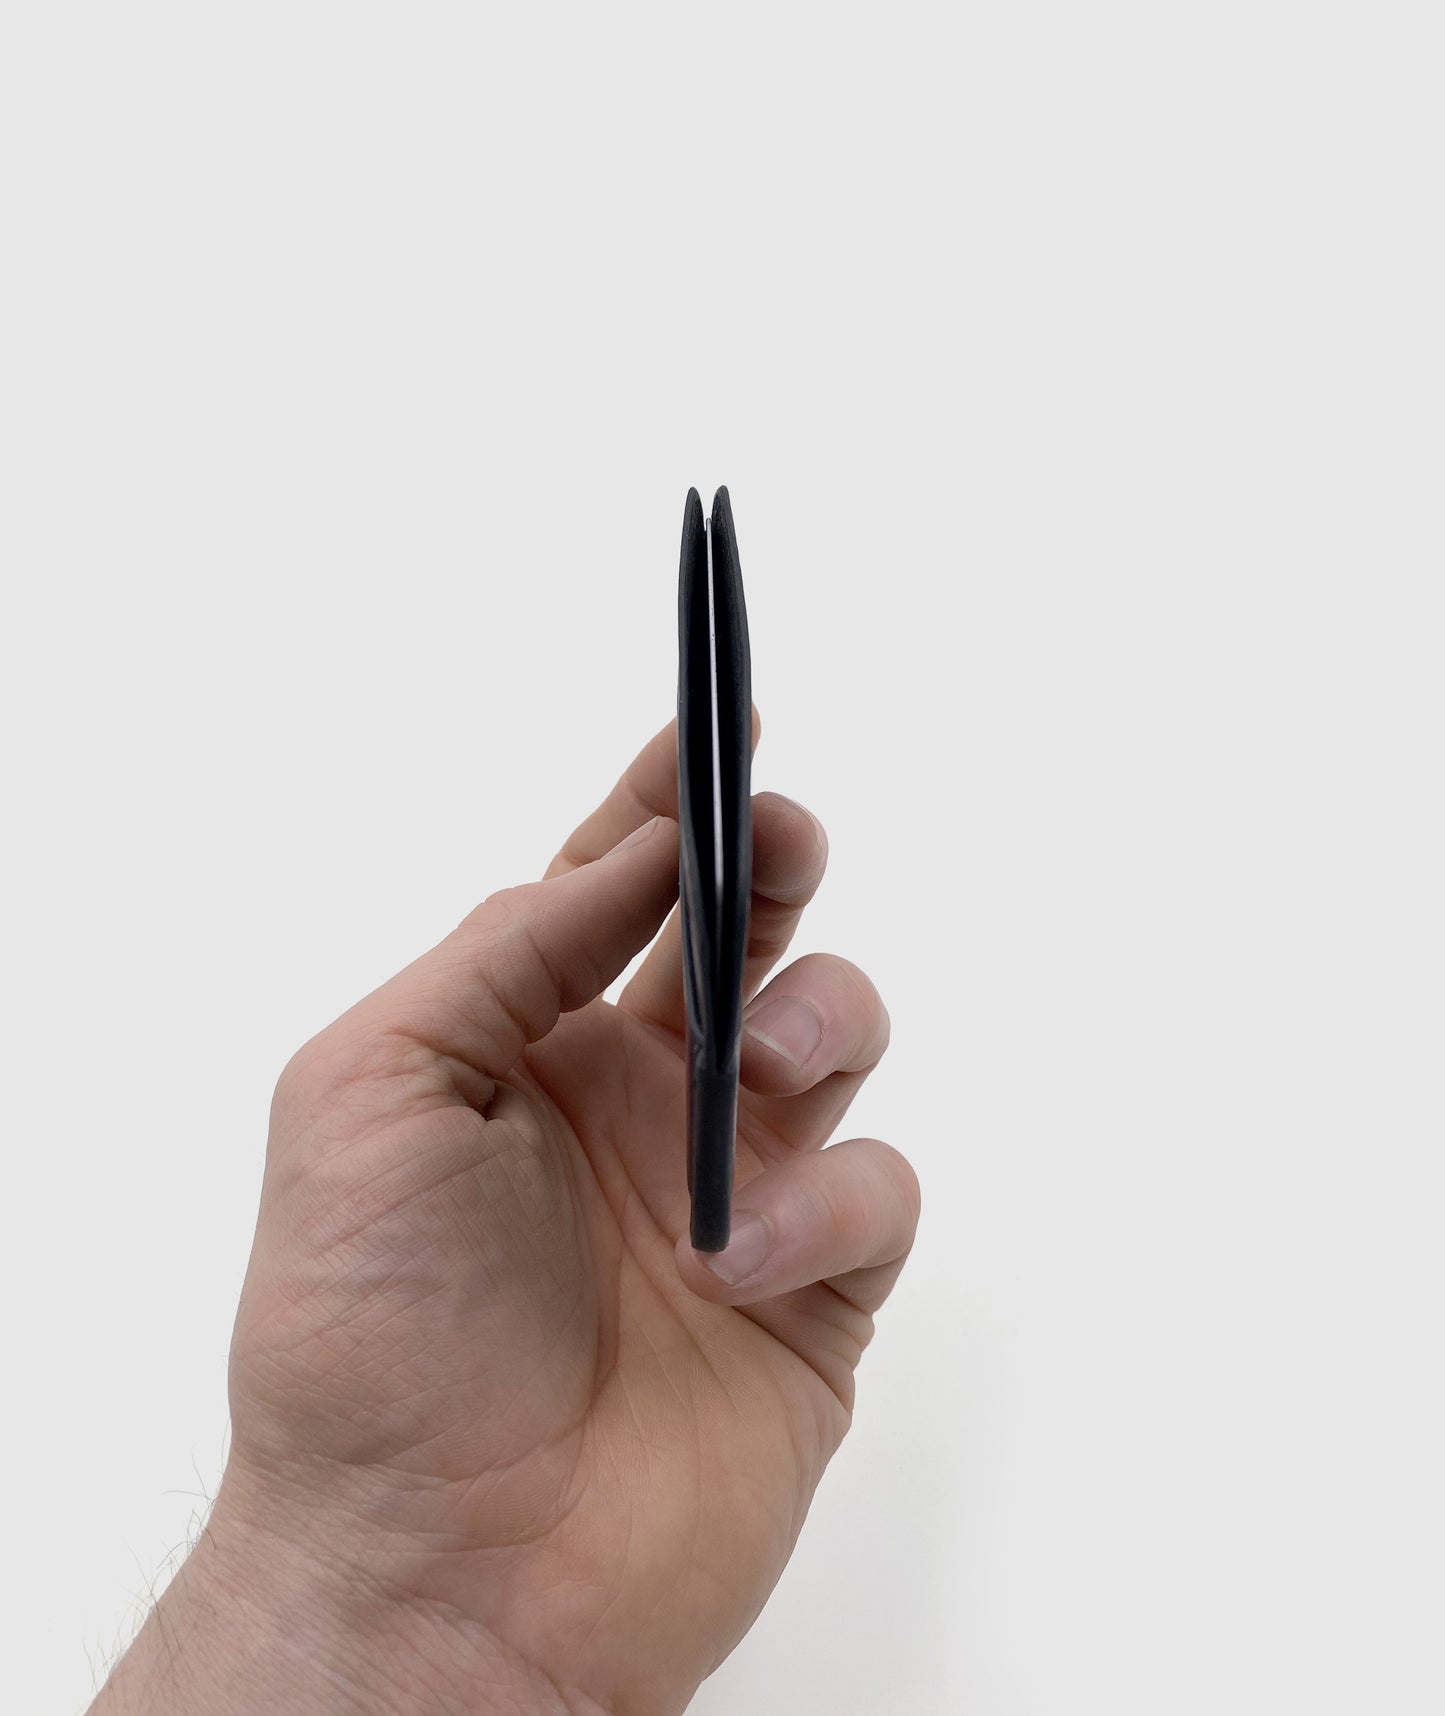 Porte-cartes minimaliste en cuir noir